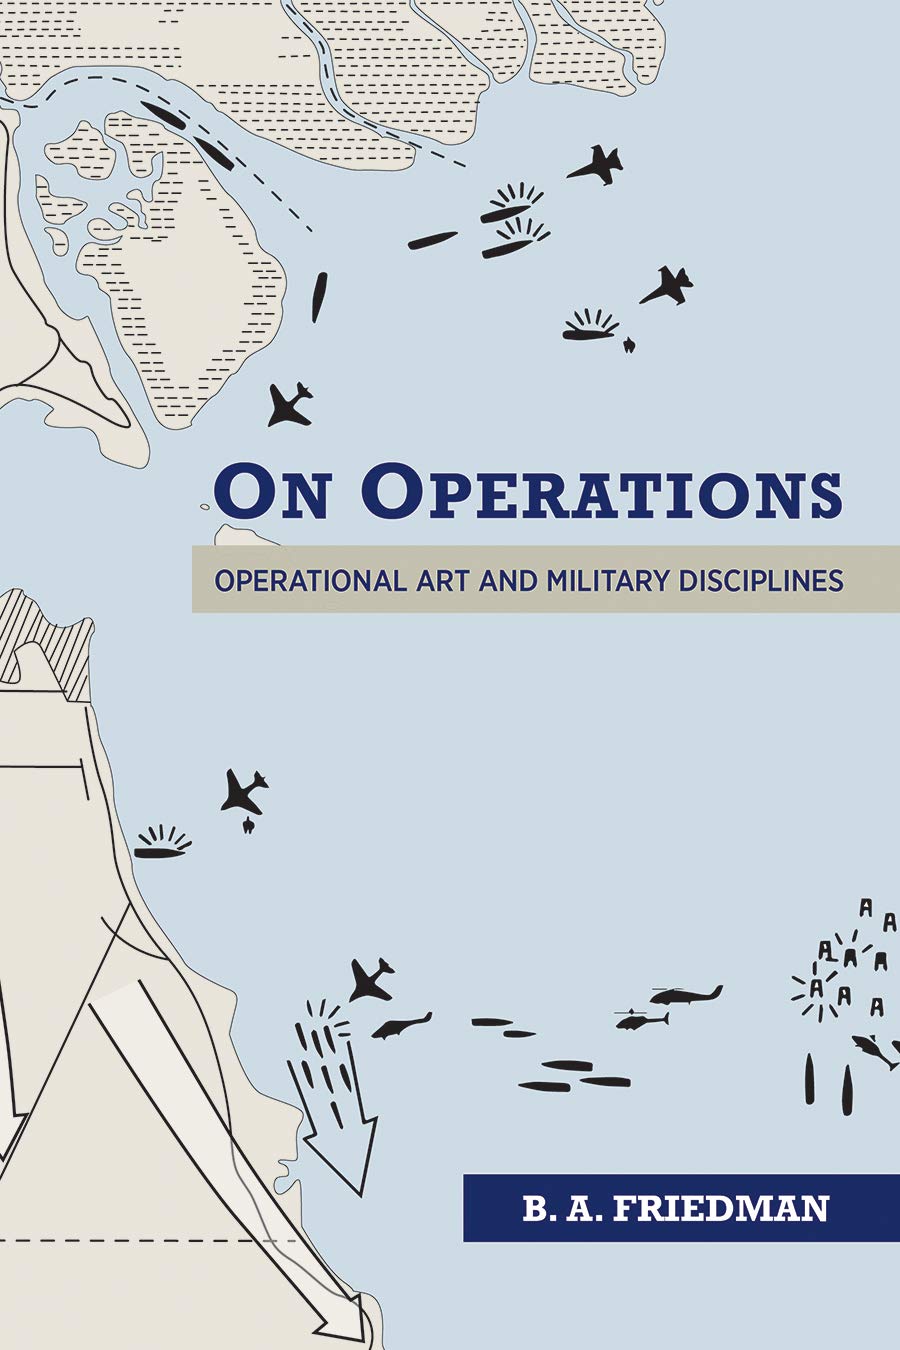 B. A. Friedman: On Operations (2021, Naval Institute Press)